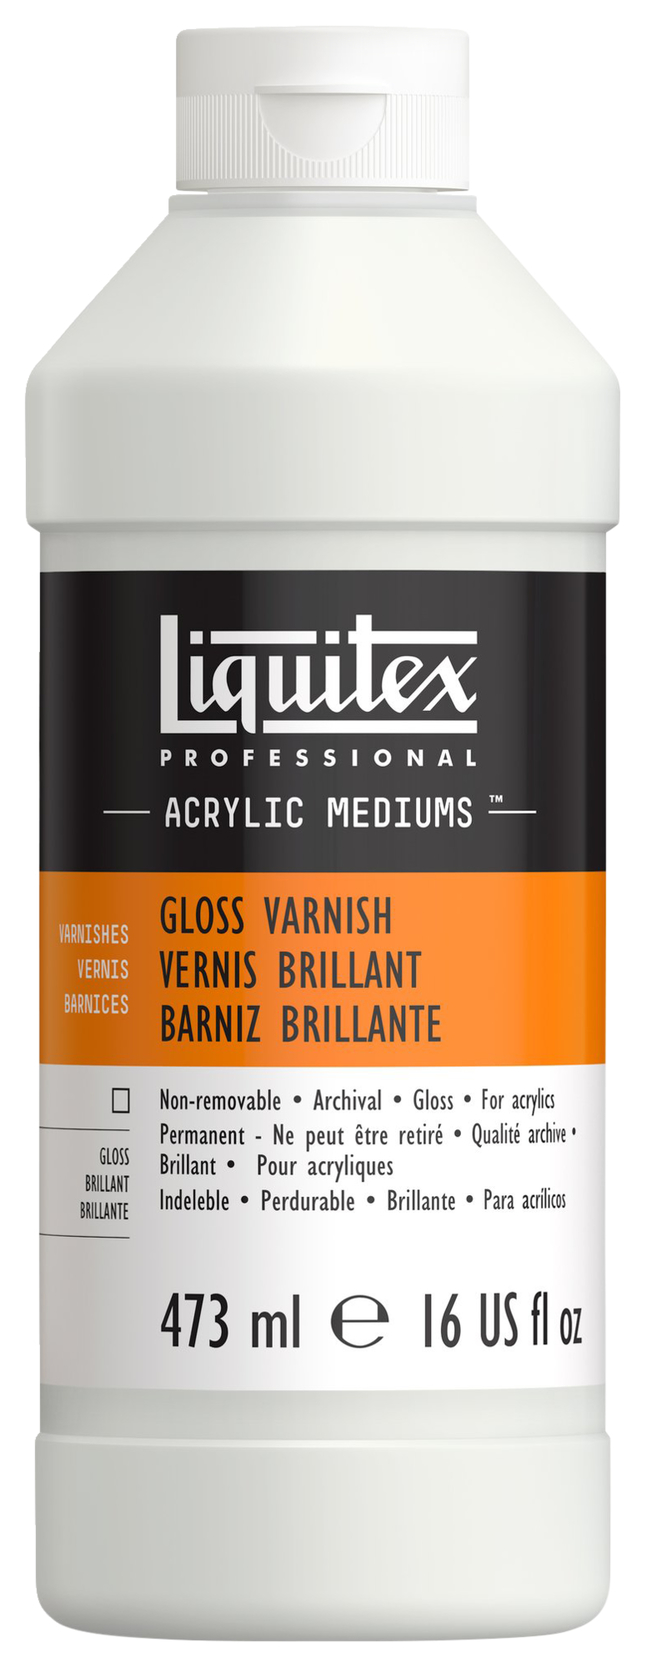 108) How I Use Liquitex Gloss Medium To 'Varnish' Paintings